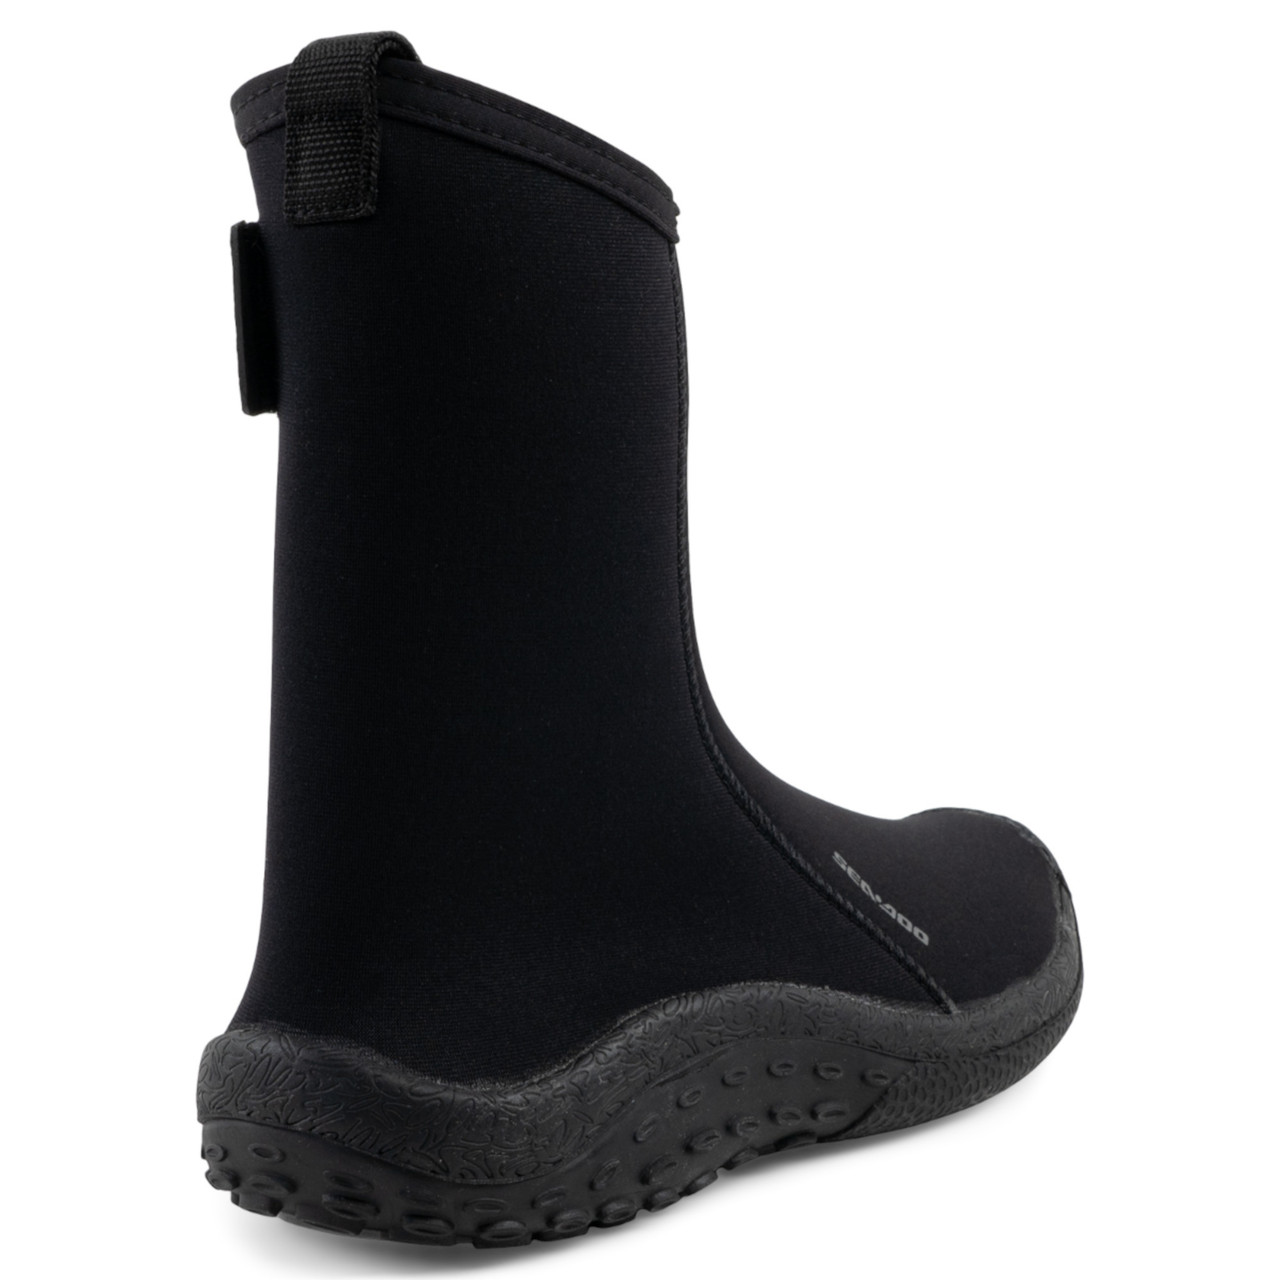 Sea-Doo New OEM, Unisex Onesize Ankle Guarding Neoprene Boots, 4442622590